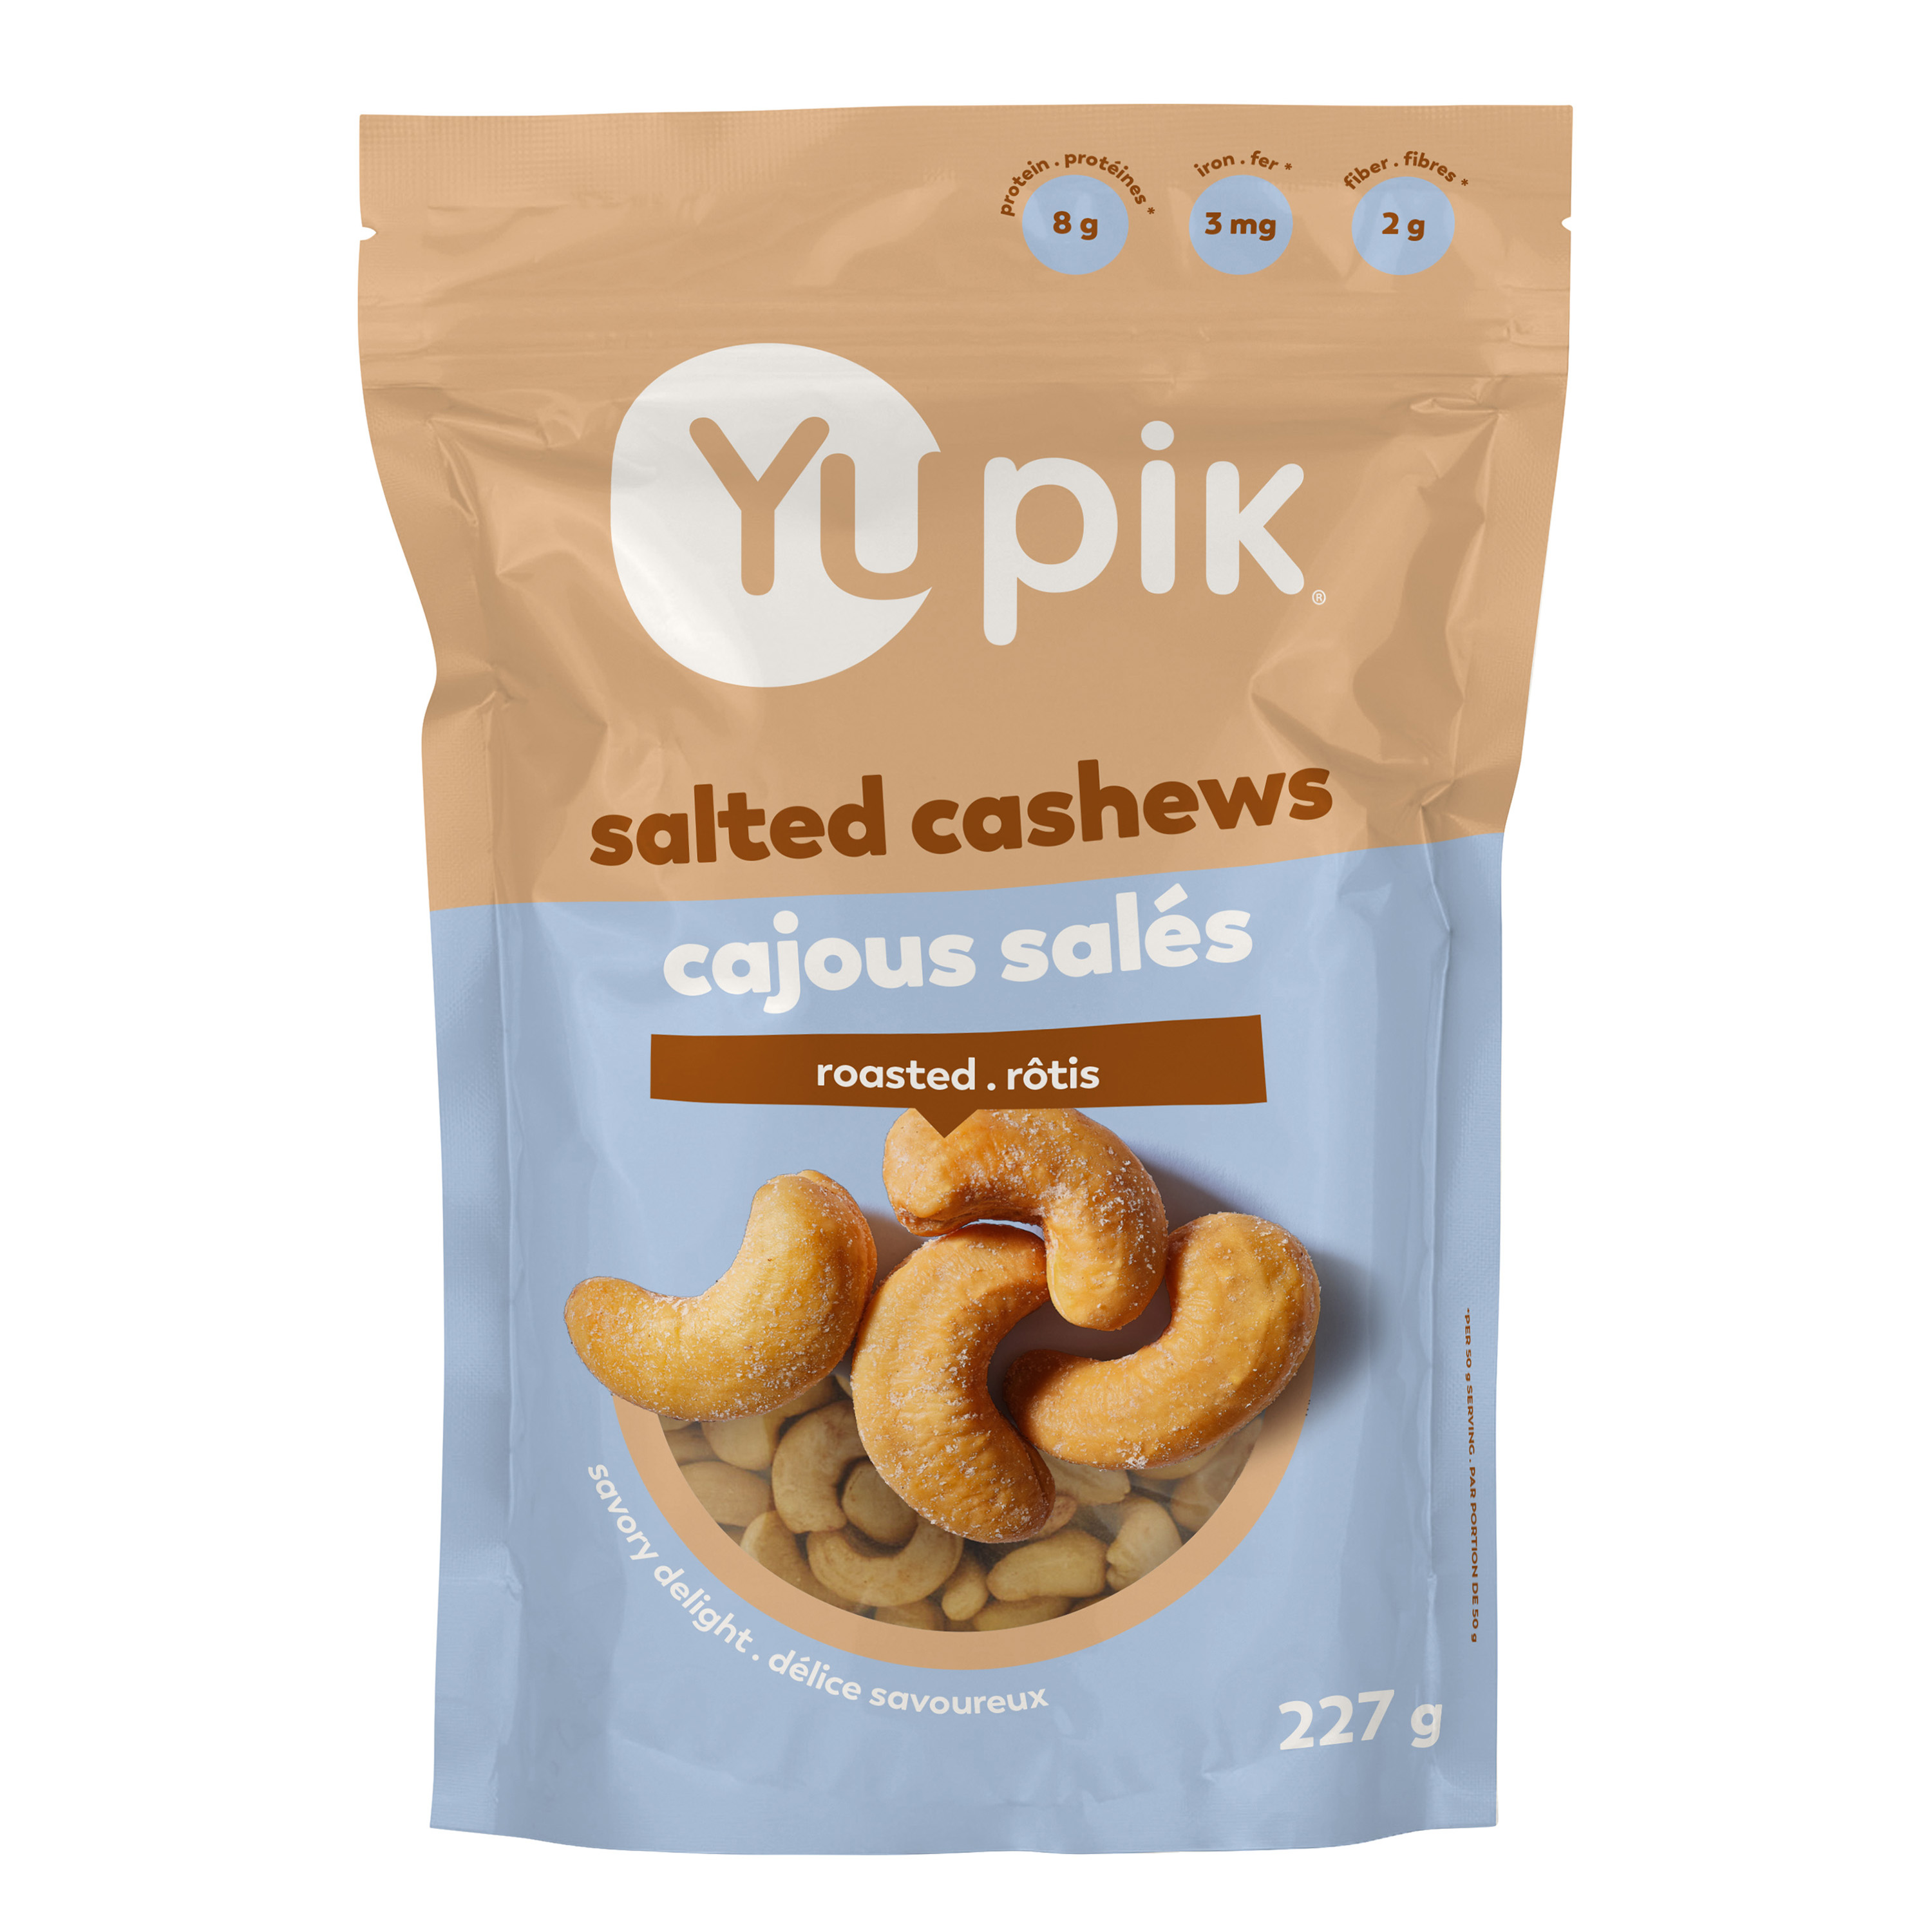 Cashews, Non GMO Canola oil, Salt.